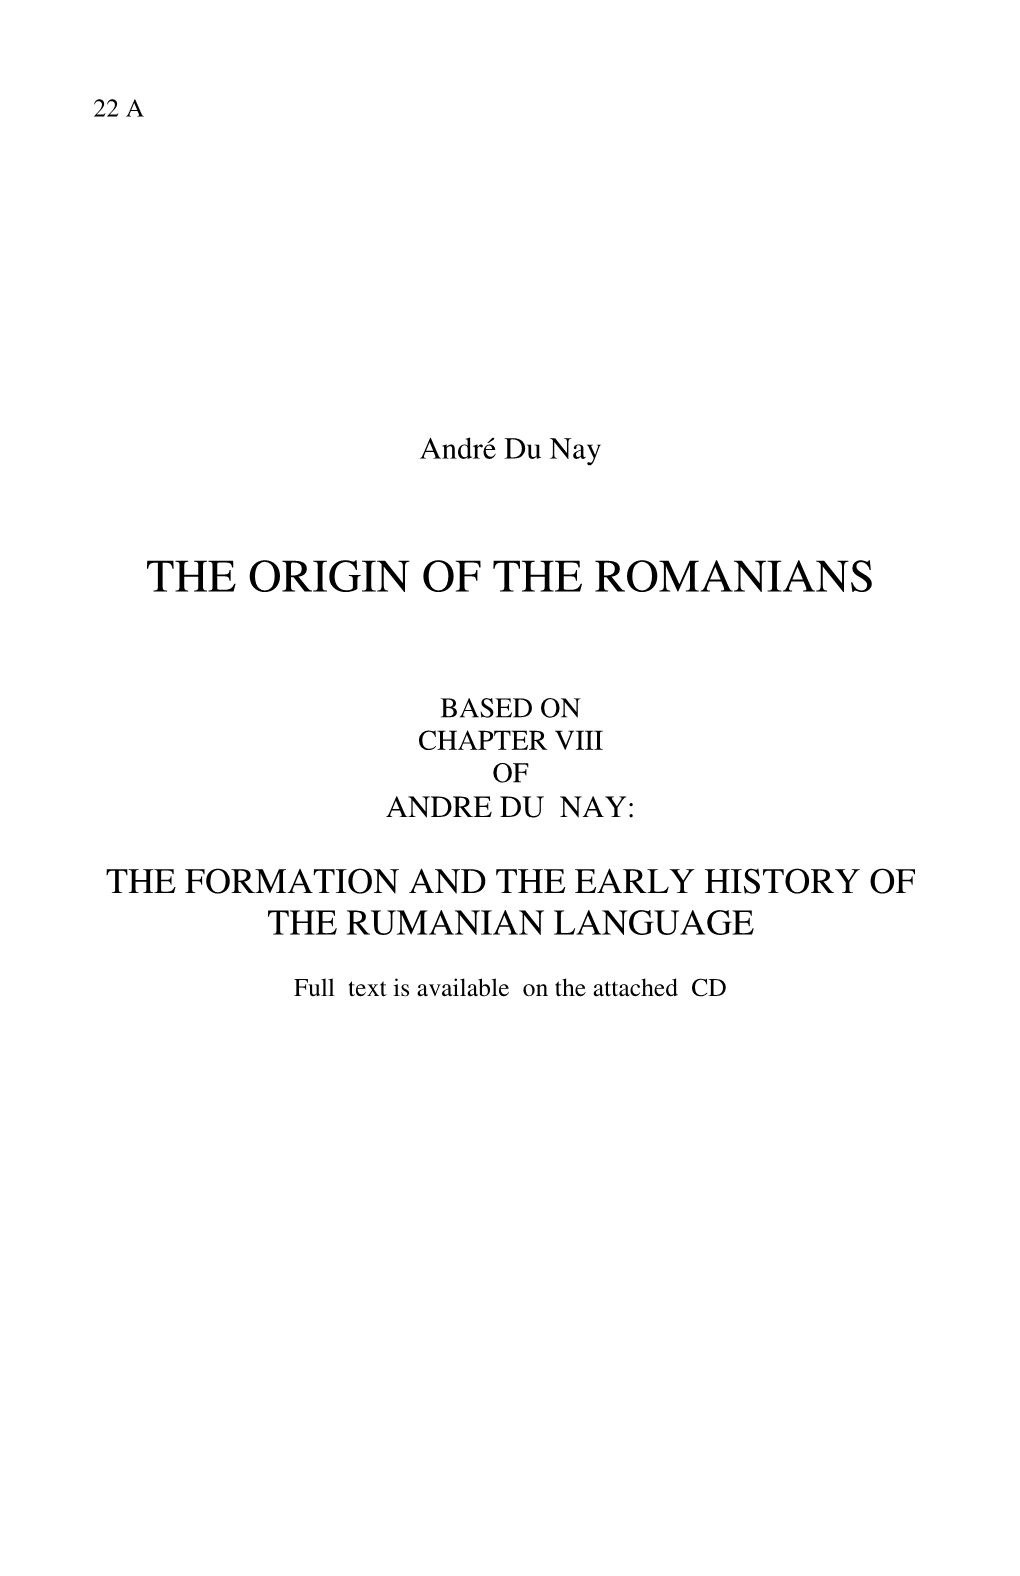 The Origin of the Romanians